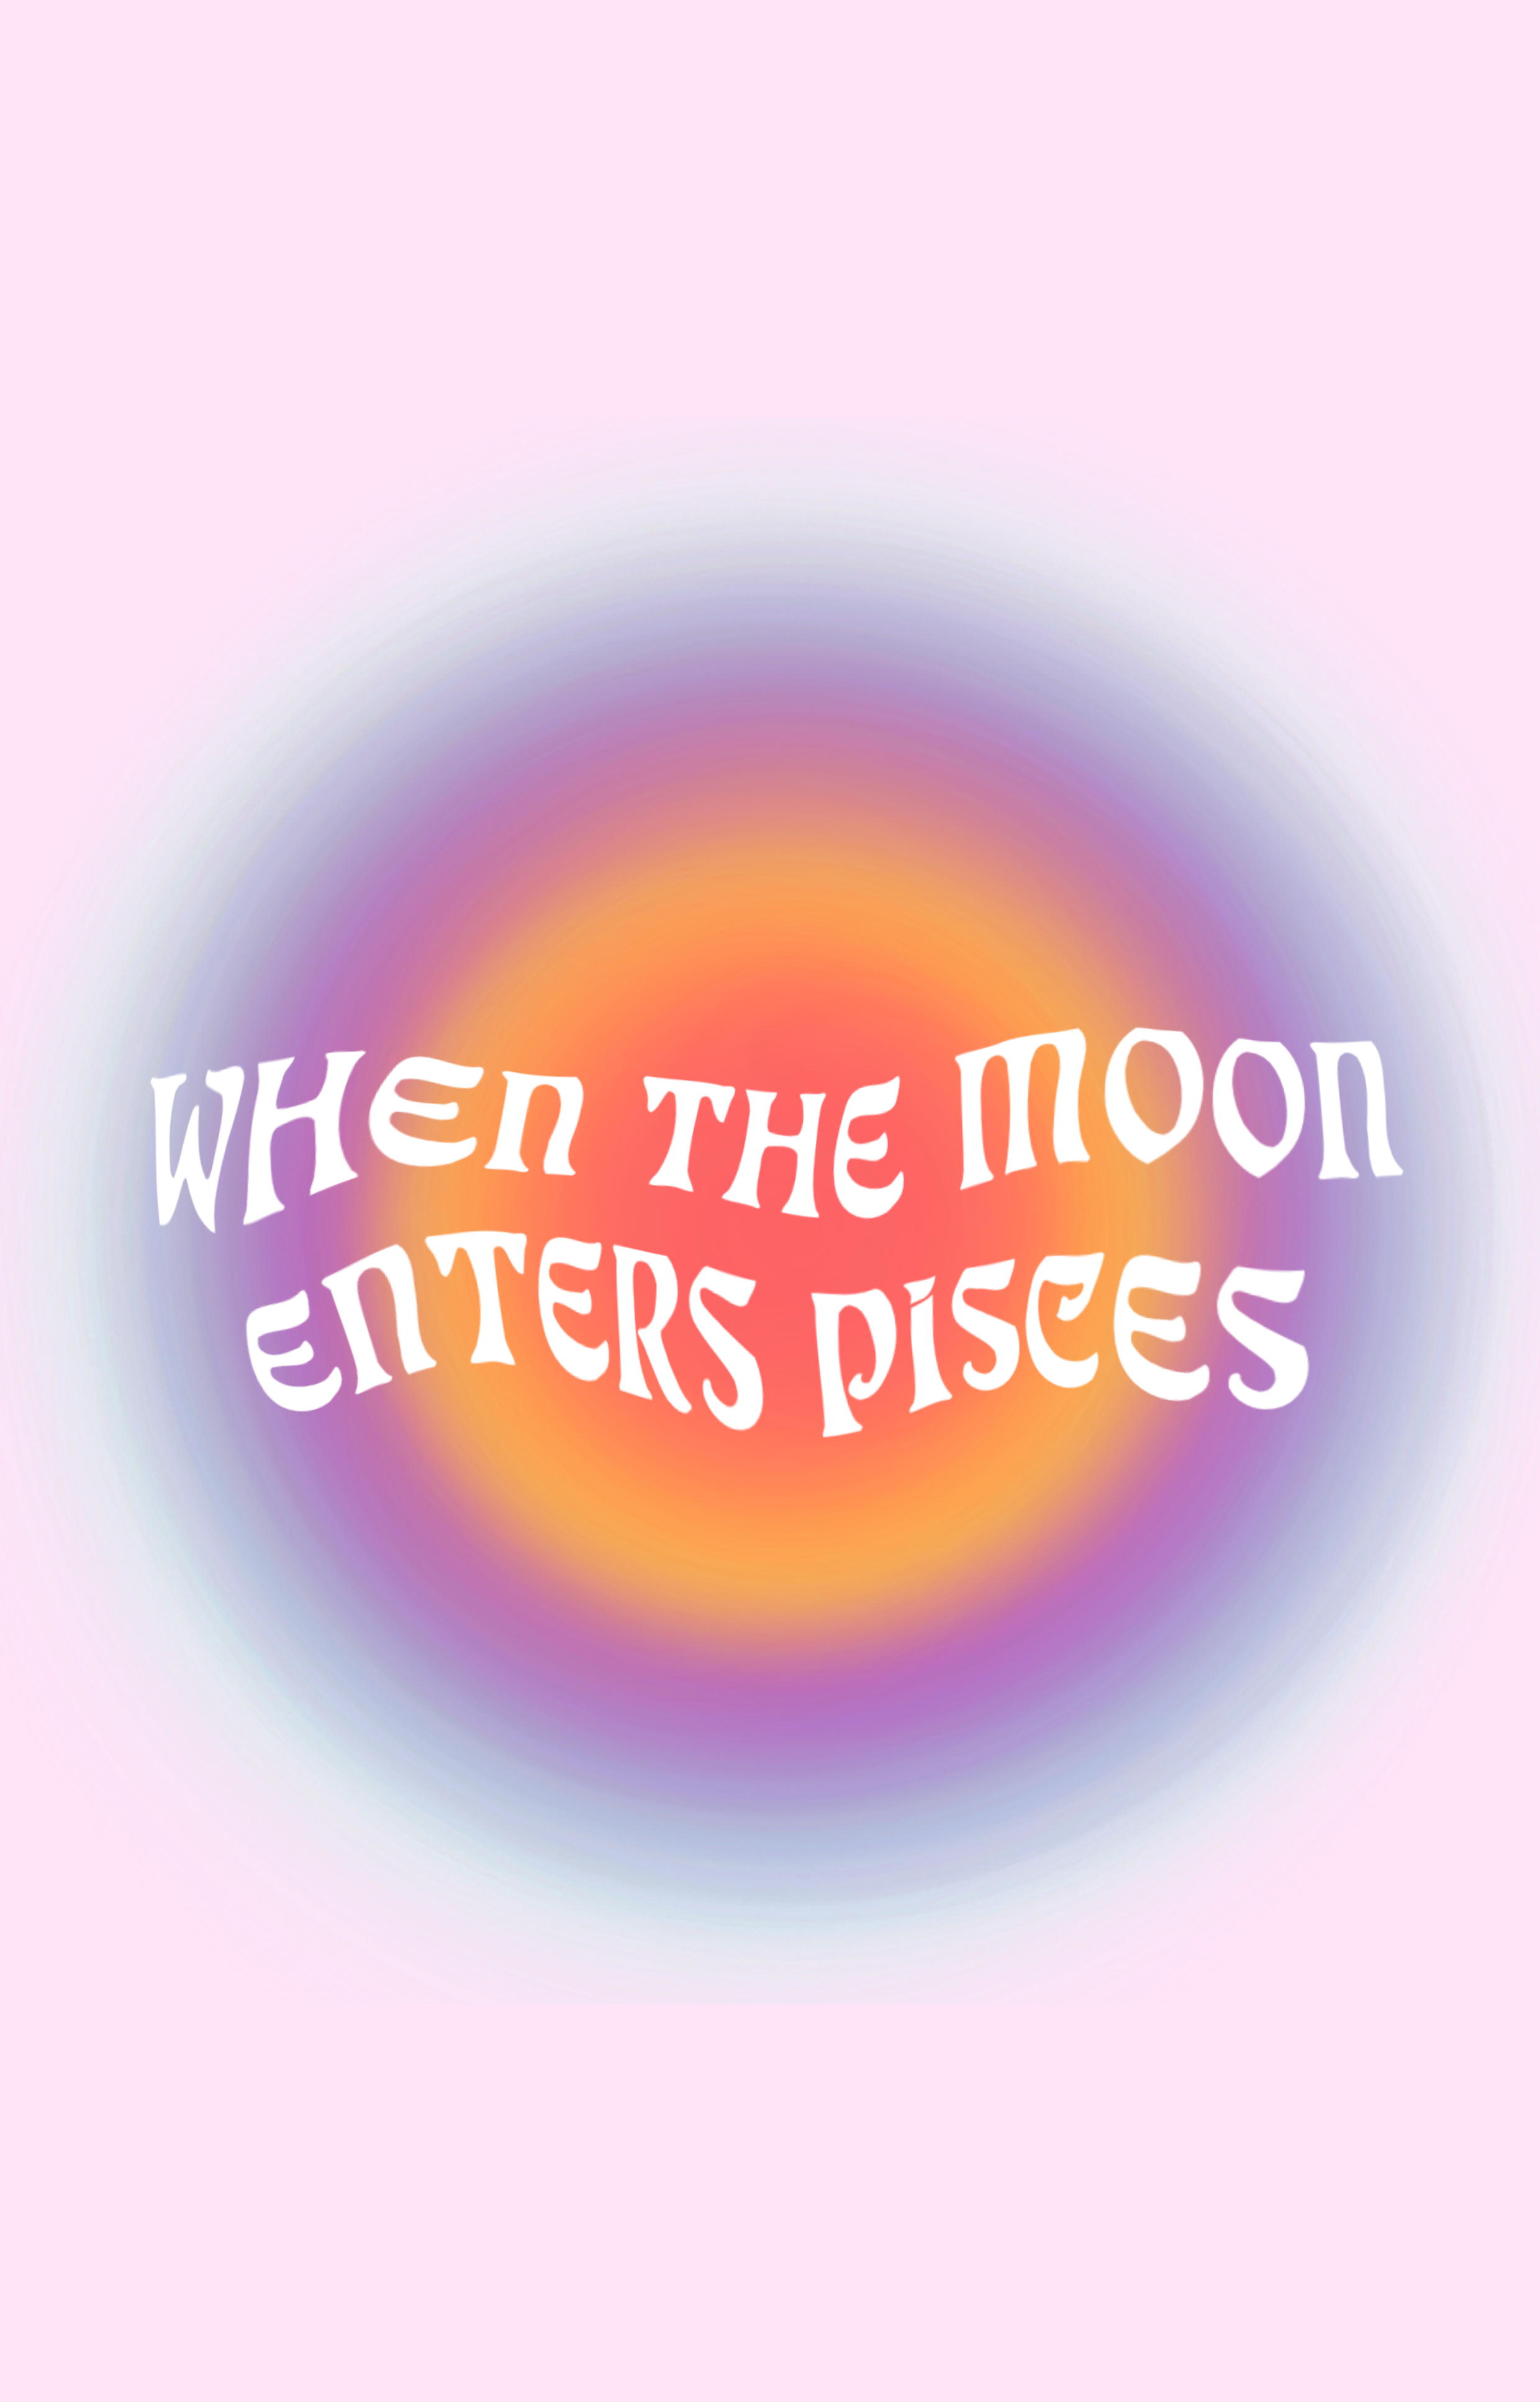 When the Moon enters Pisces